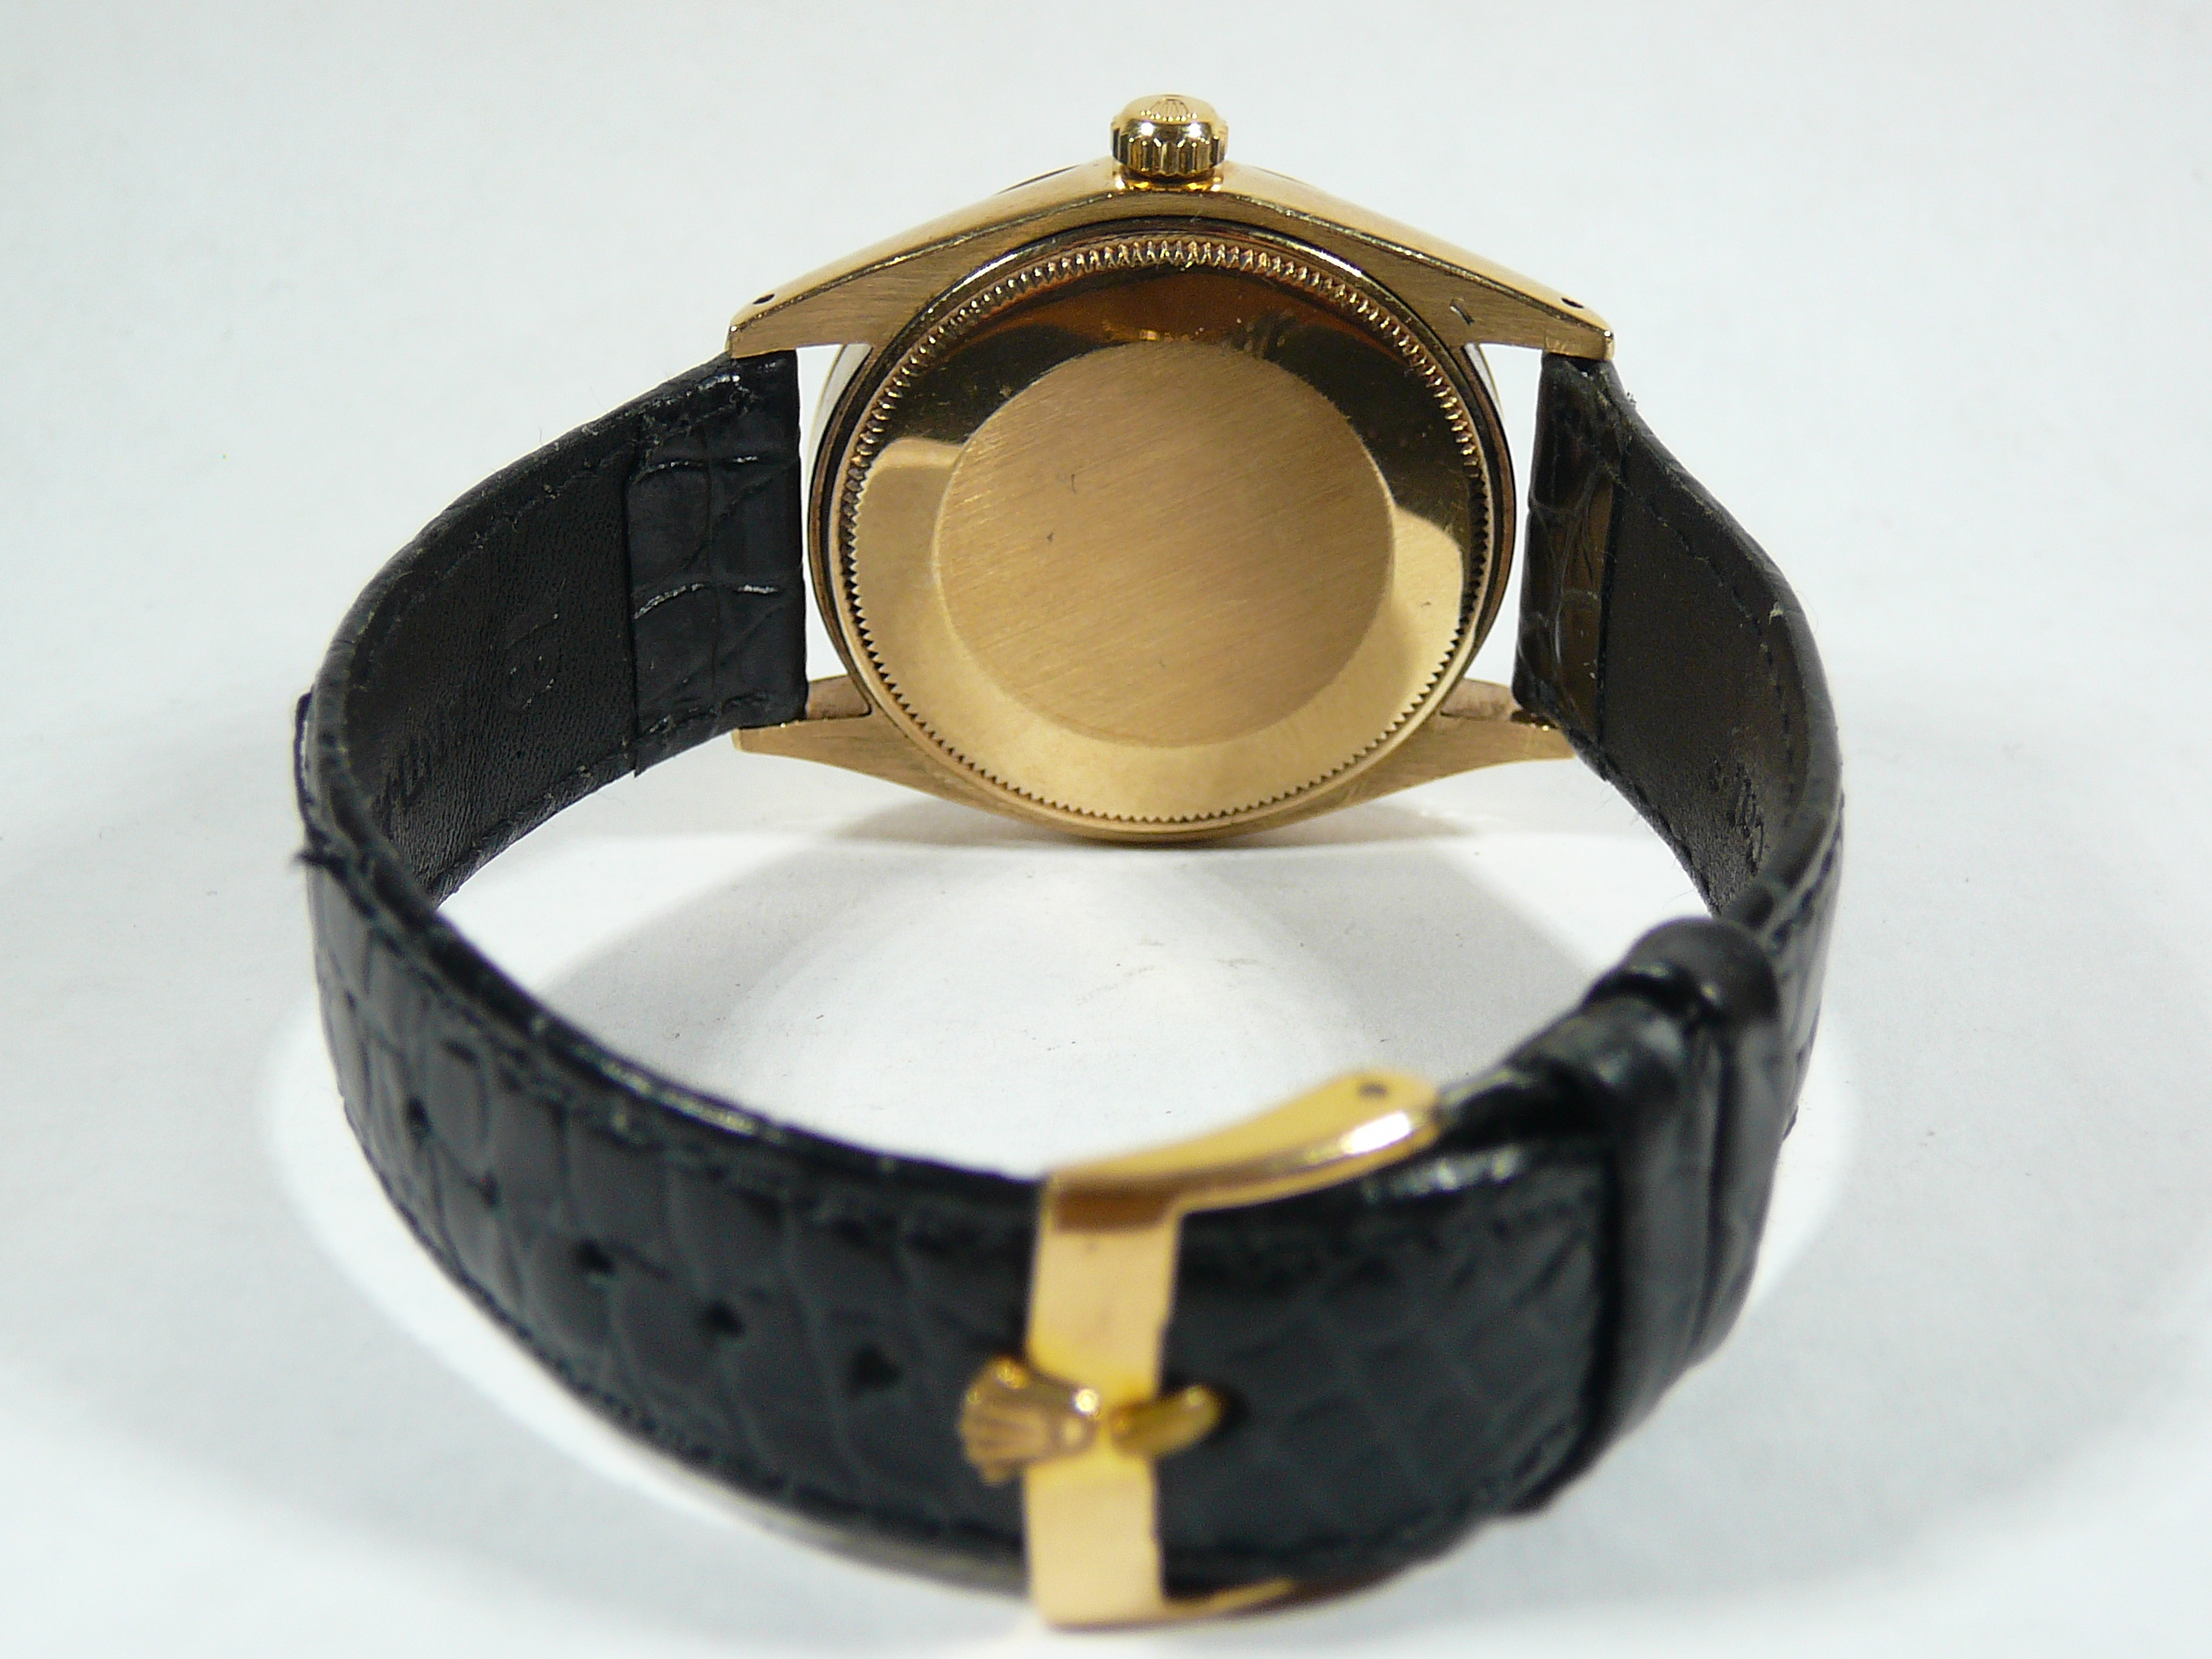 Gents Rolex Gold Wrist Watch - Image 3 of 4